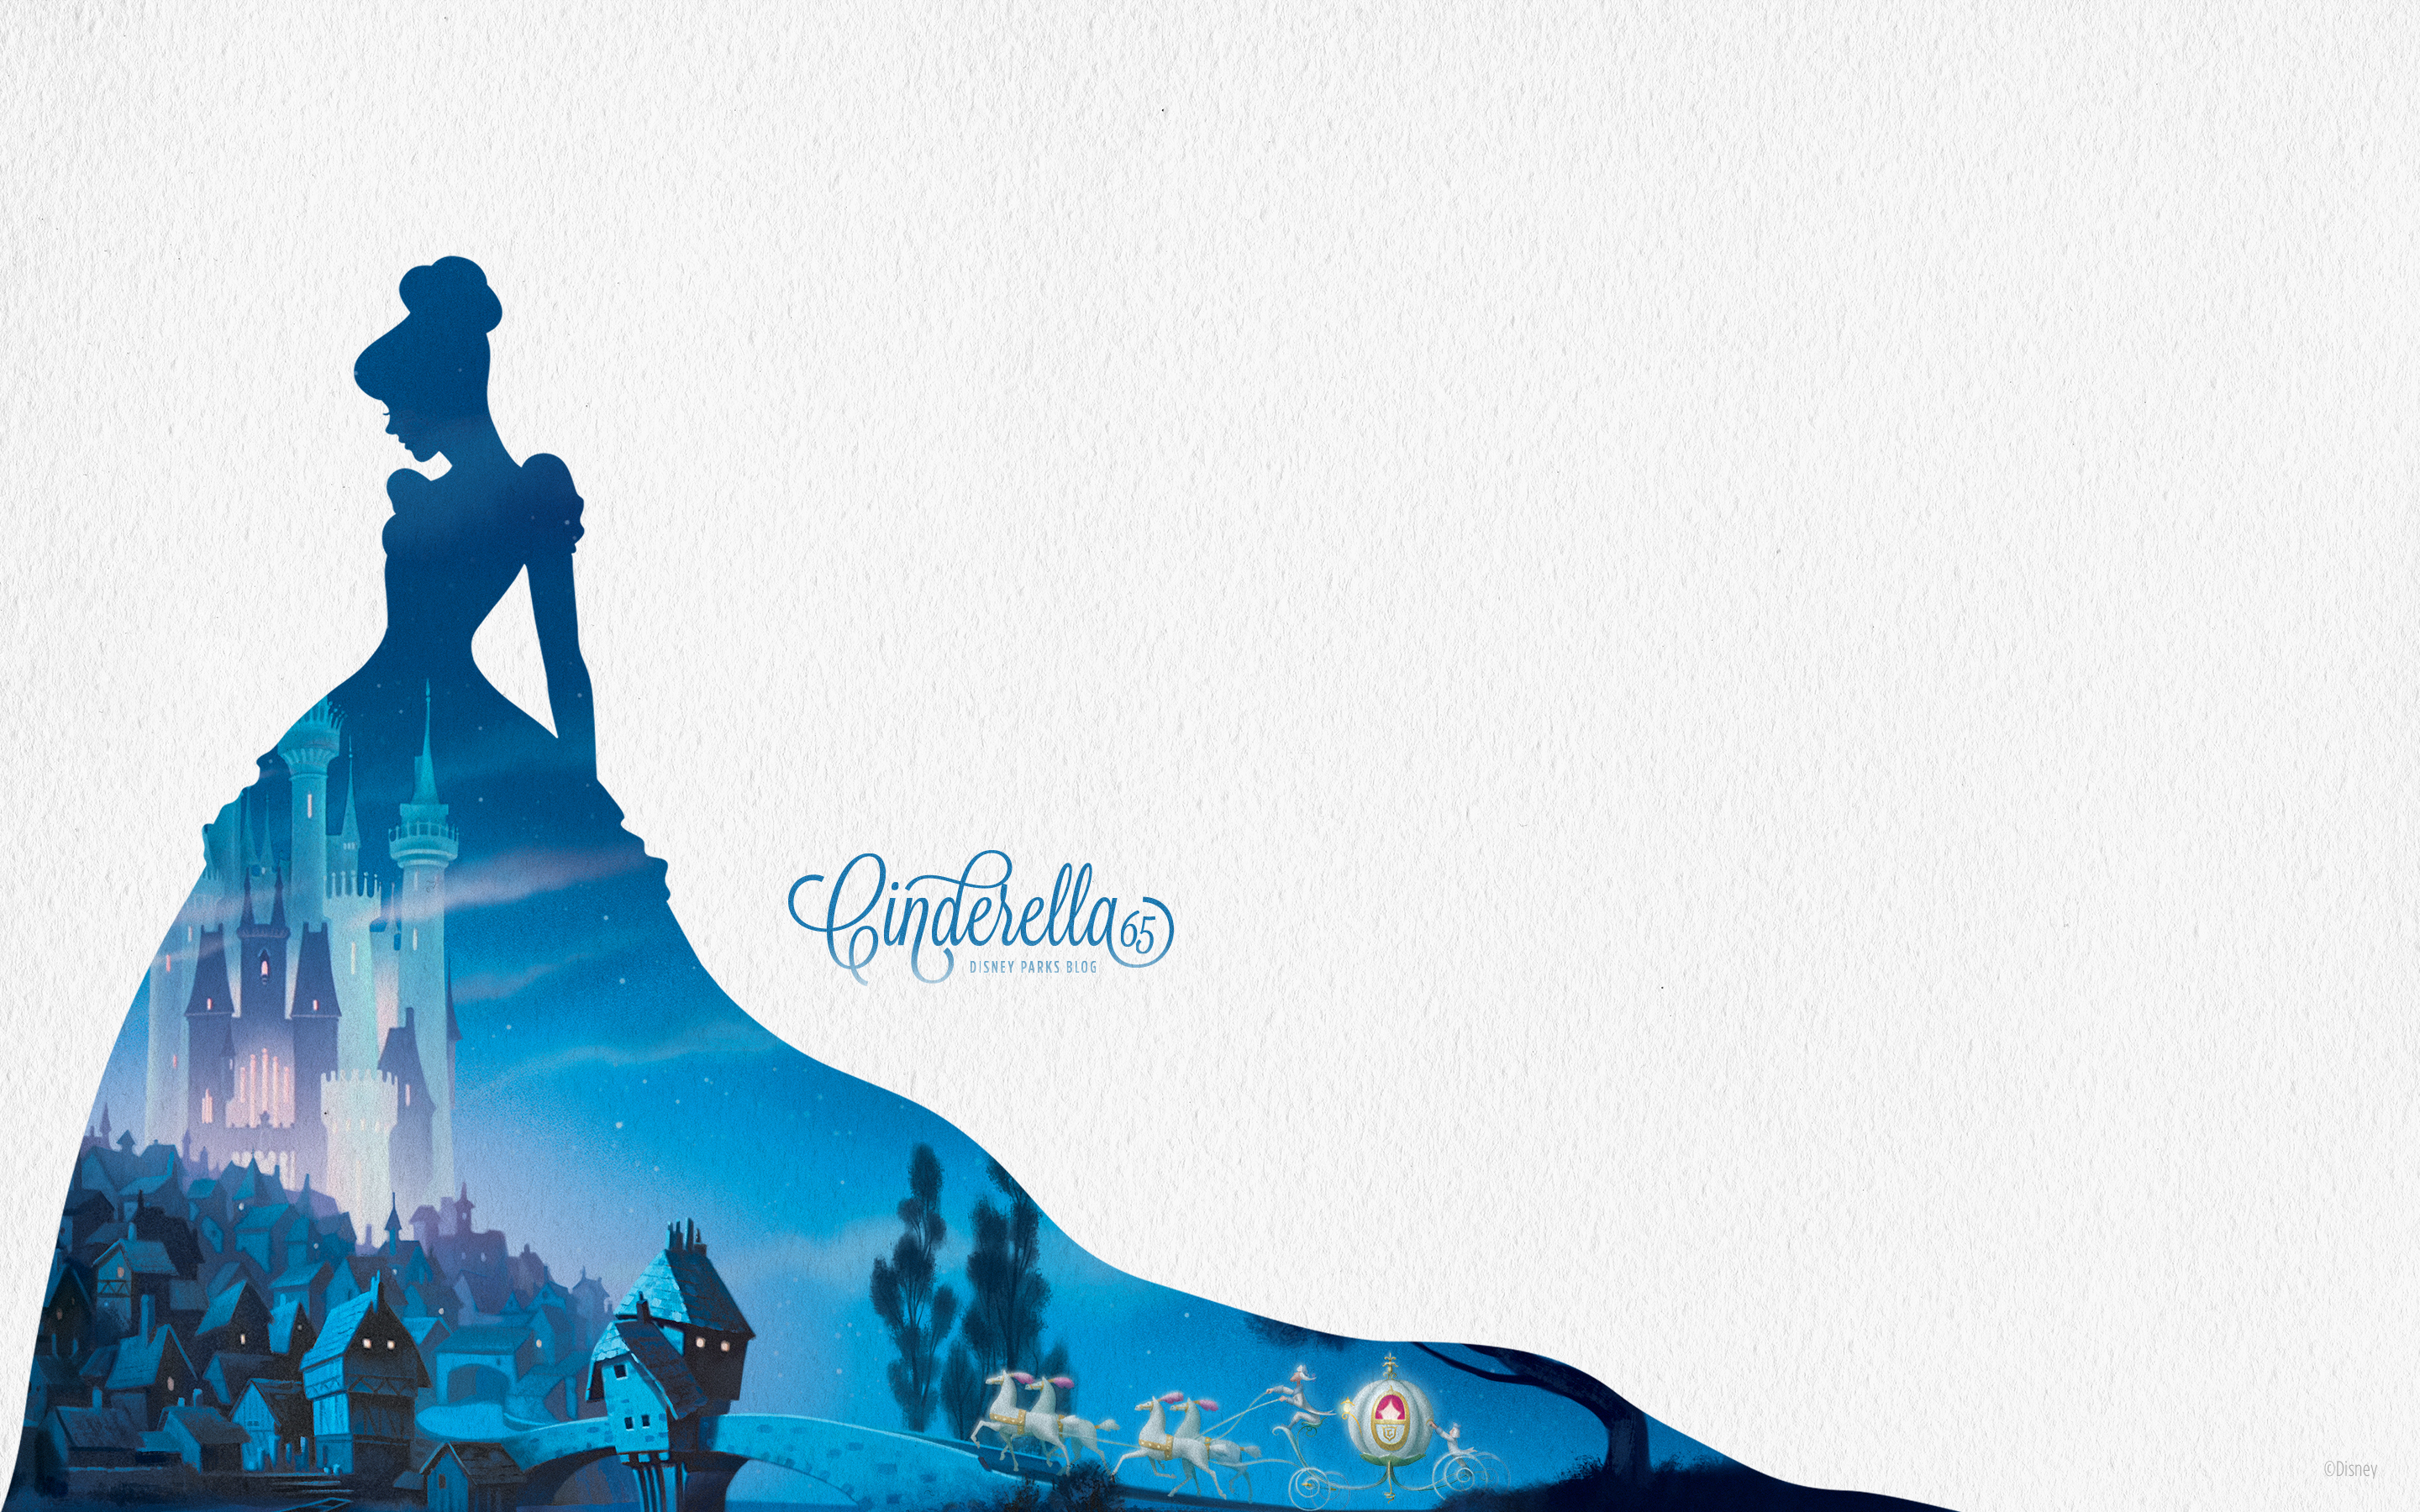 Cinderella Wallpaper